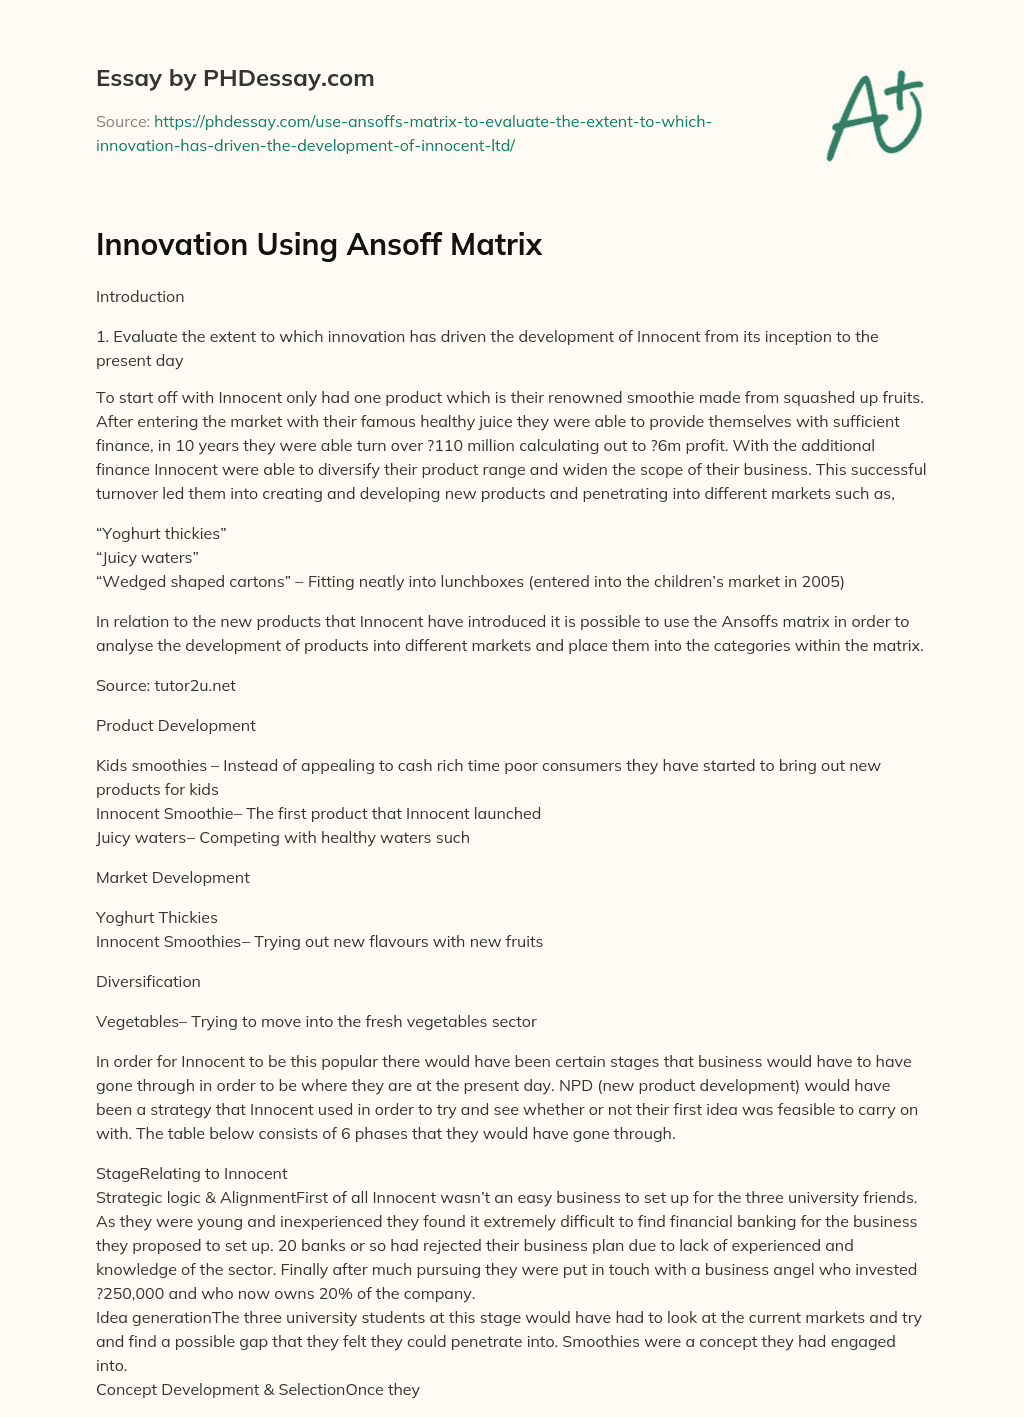 Innovation Using Ansoff Matrix essay